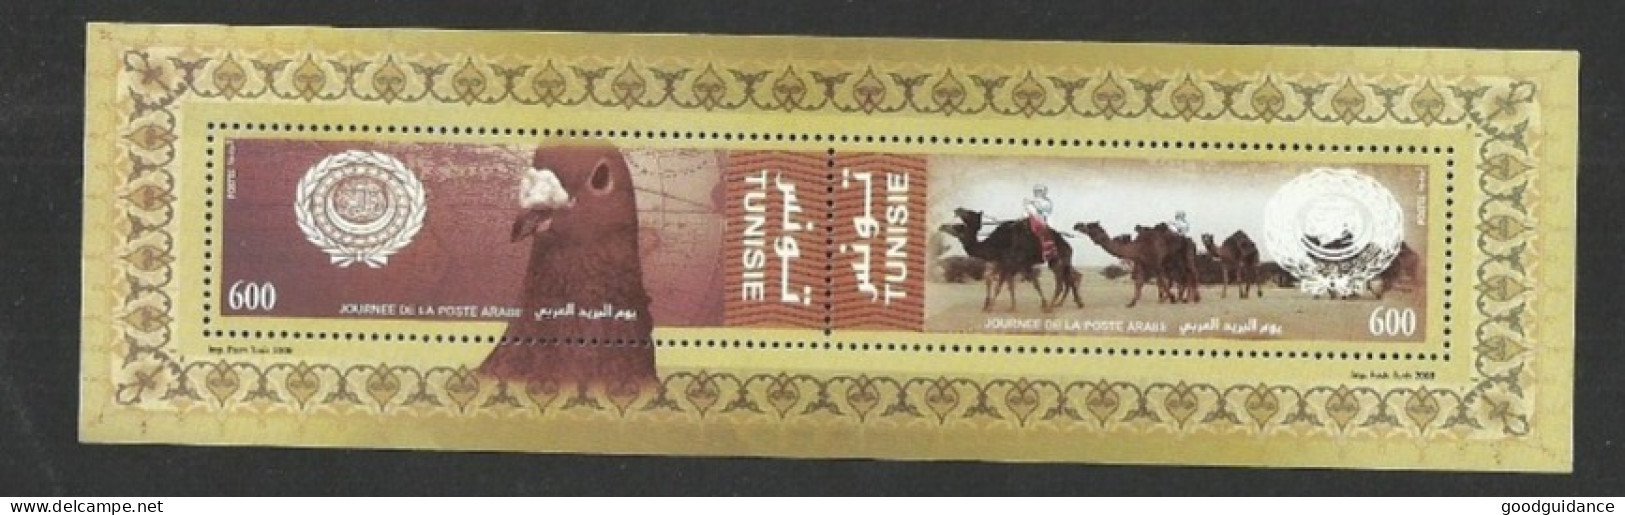 2008- Tunisia-  Minisheet  - Arab Post Day 2008 - Joint Issue - Bird - Camel - Desert - MNH** - Saudi Arabia